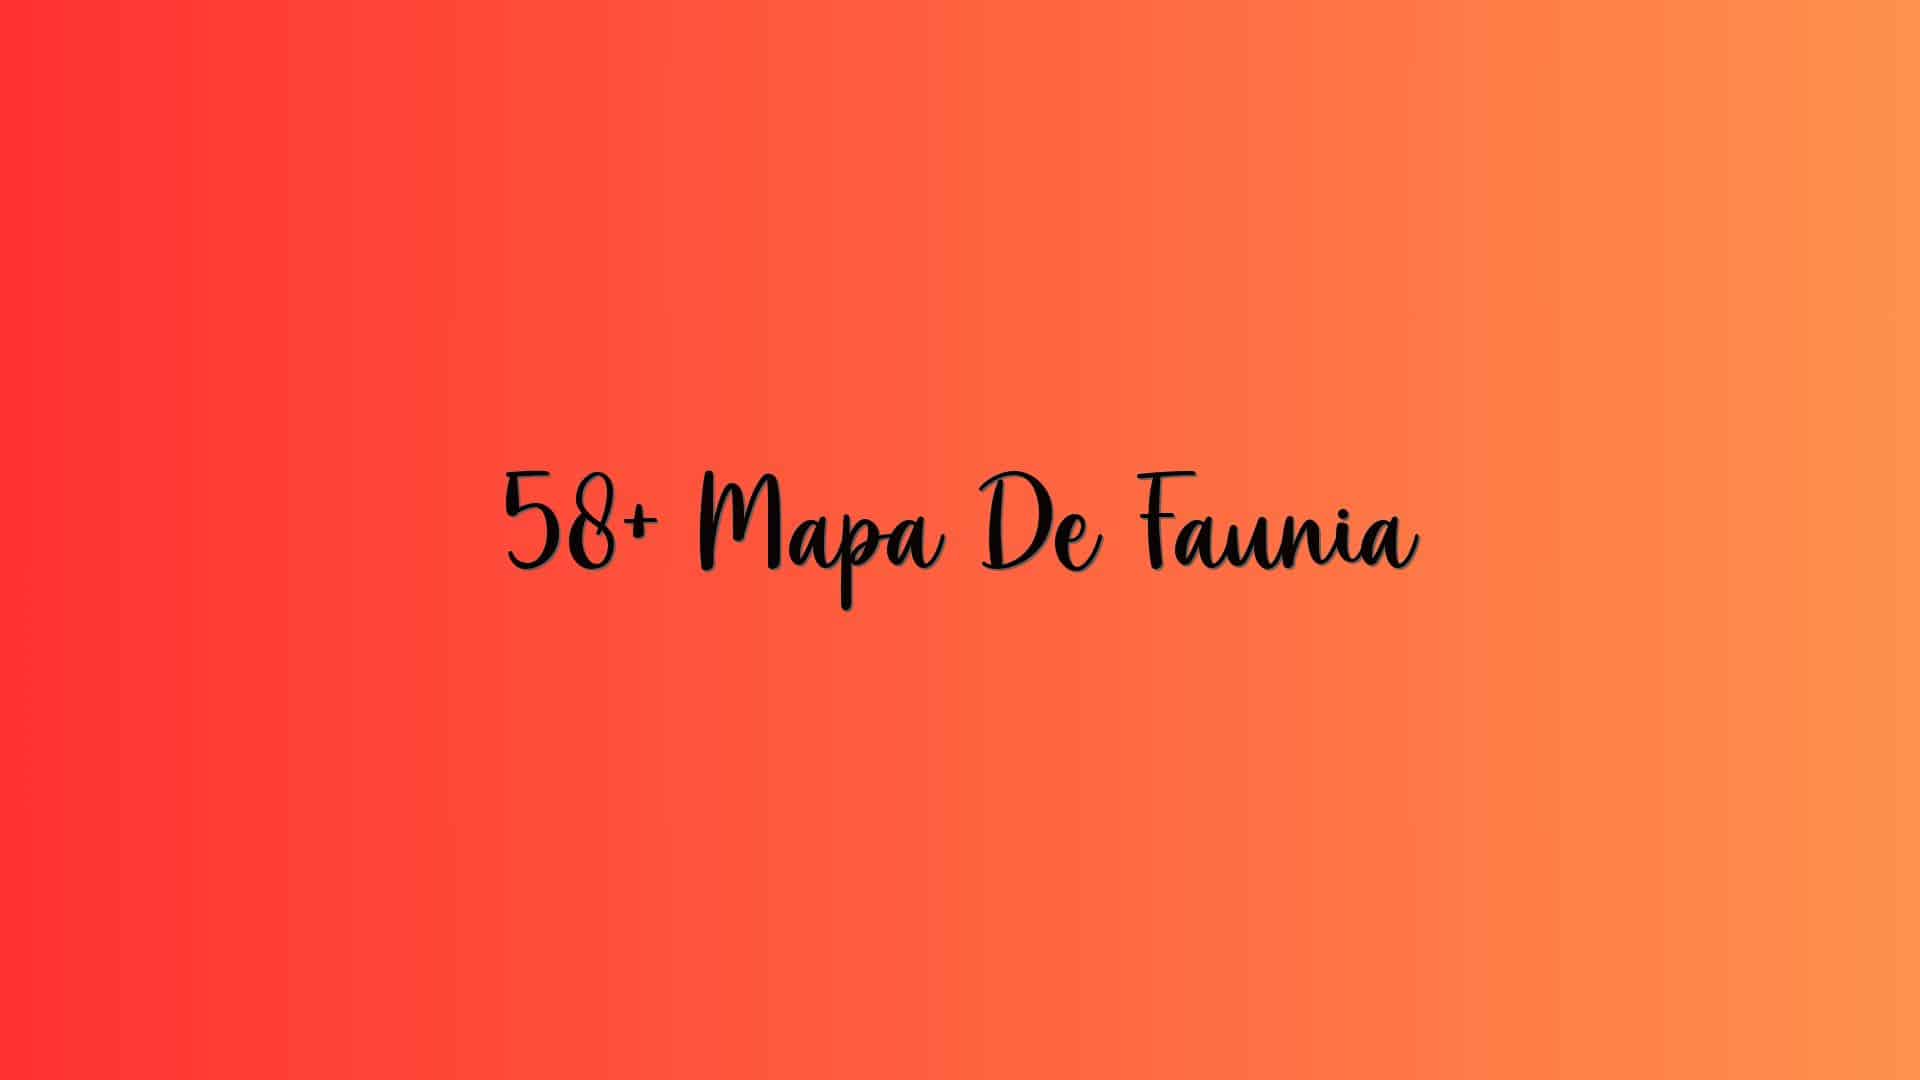 58+ Mapa De Faunia